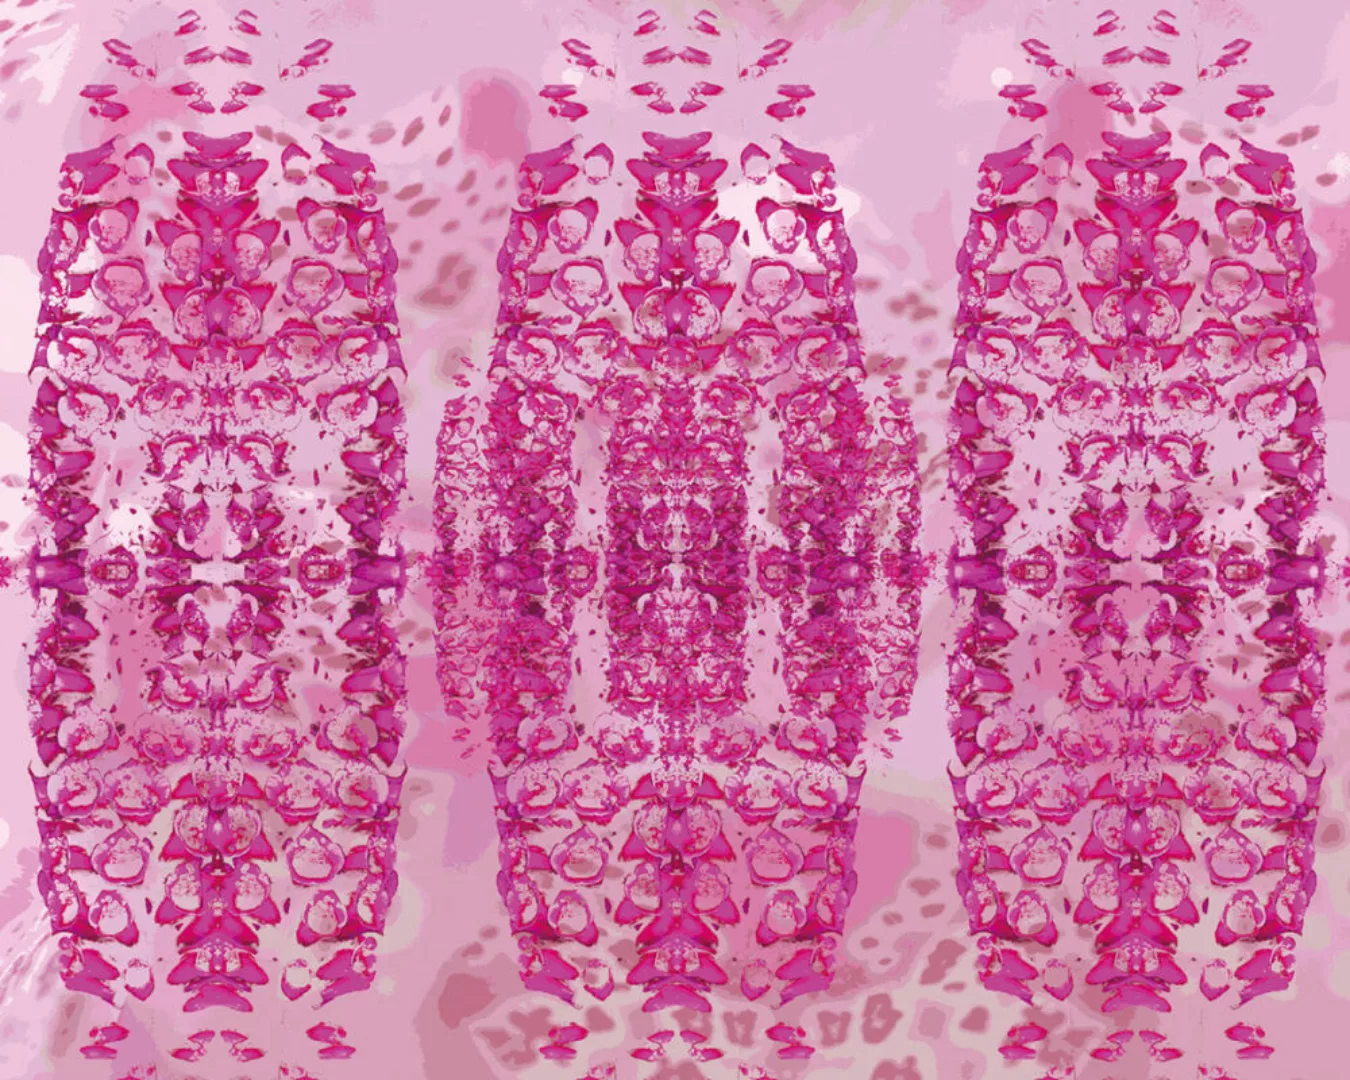 Fototapete "Rosa Ornamente" 4,00x2,50 m / Glattvlies Brillant günstig online kaufen